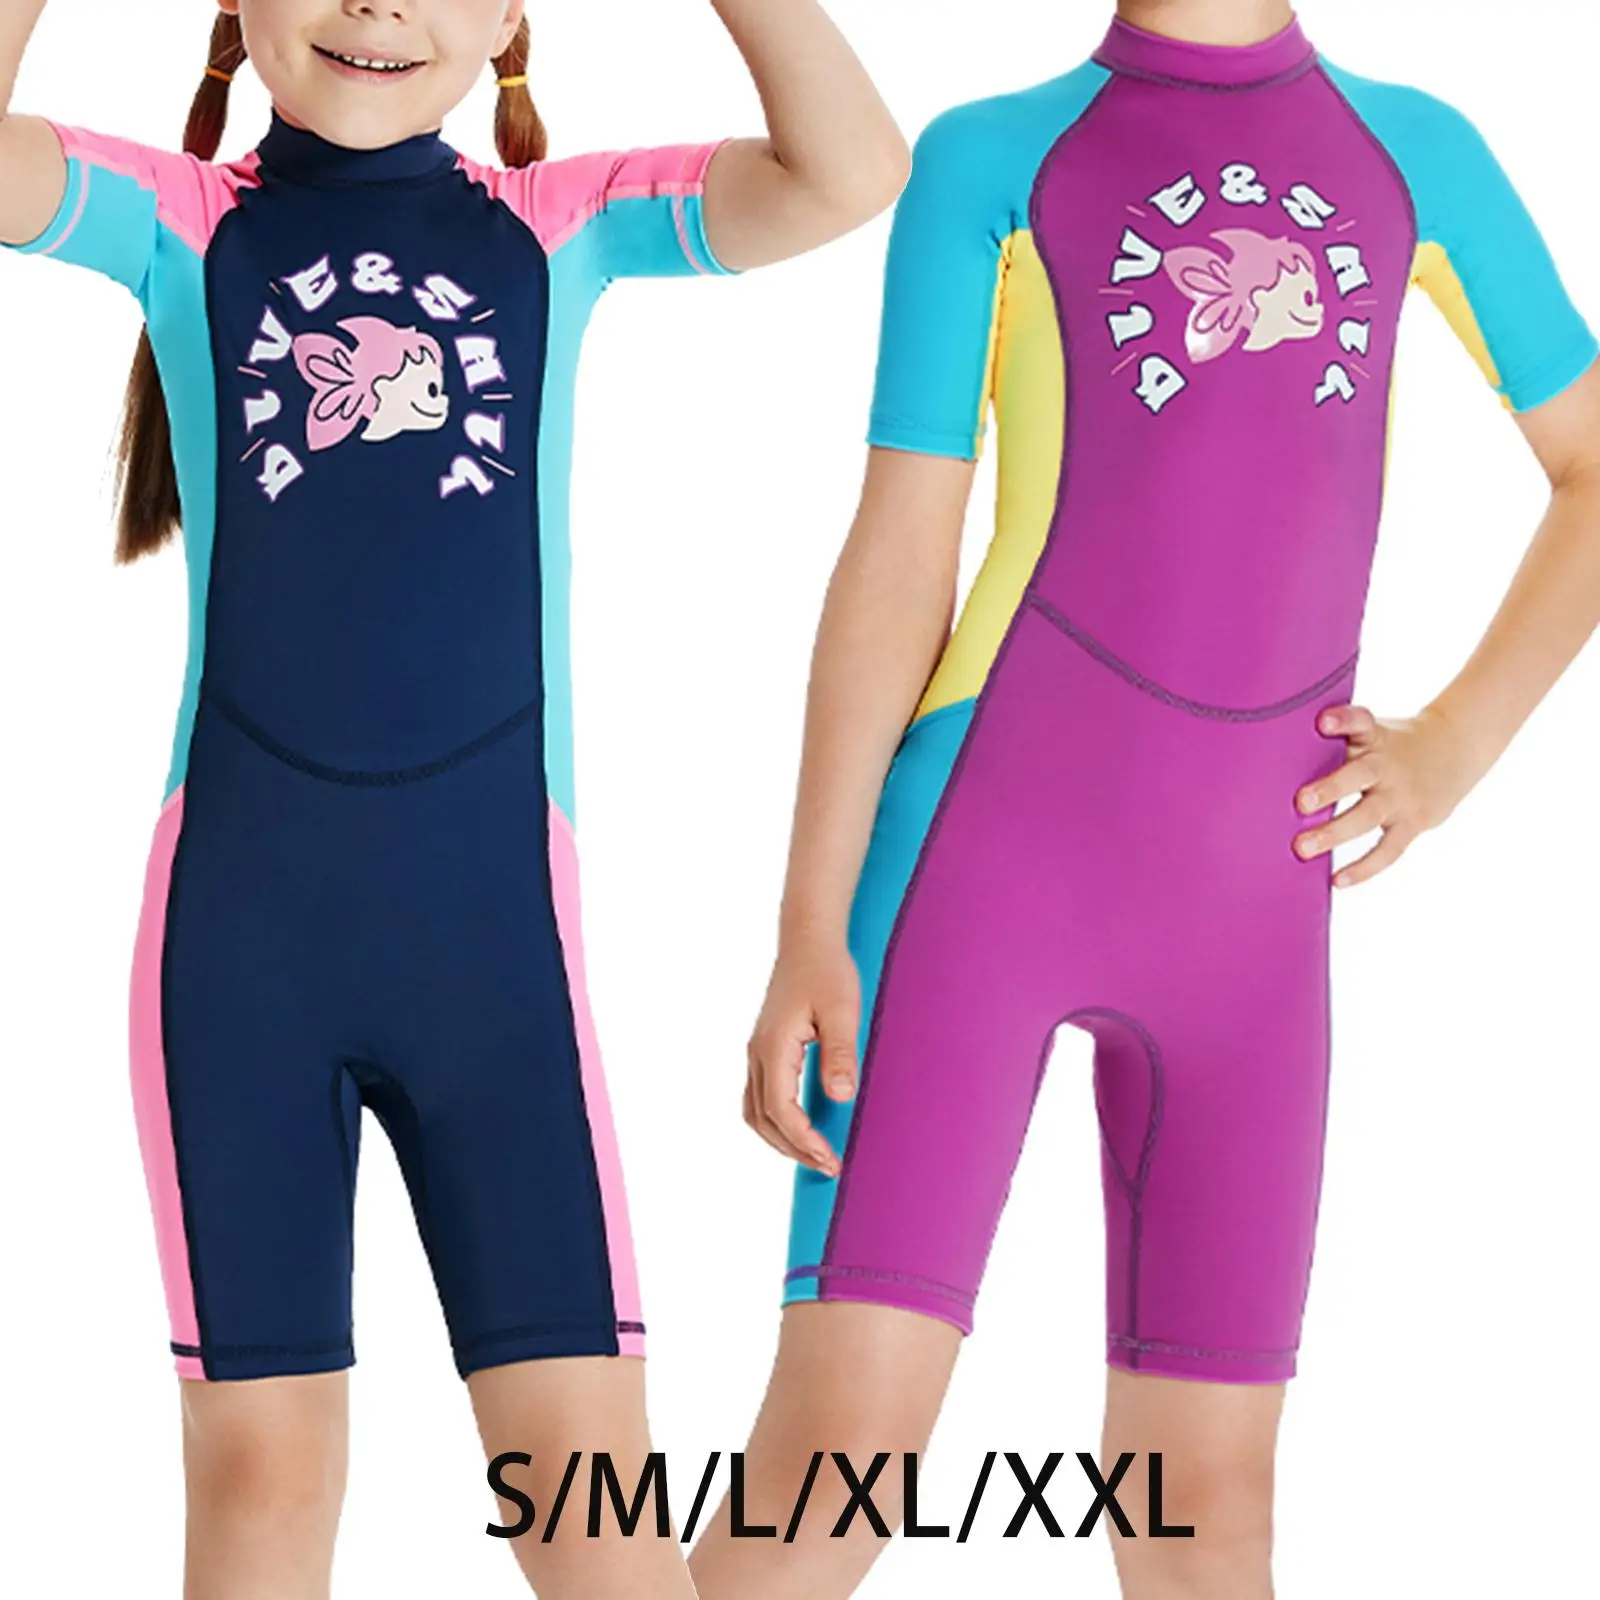 Kids Swimsuits Water Resistant Thermal Keep Warm Back Zipper swim wear for